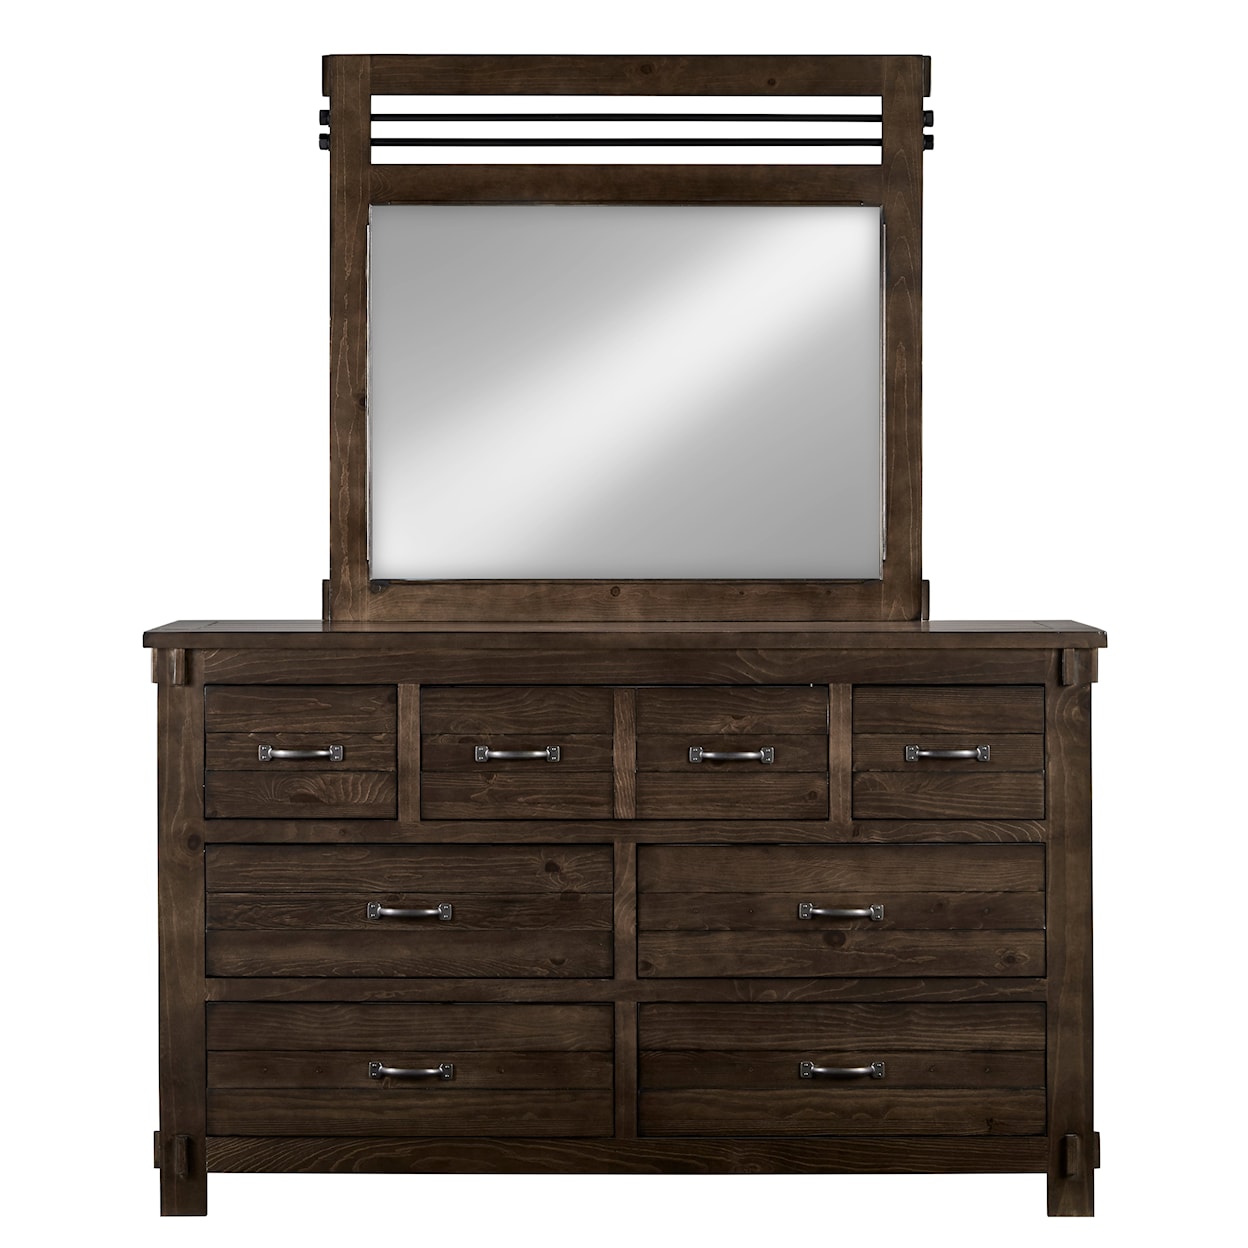 Carolina Chairs Thackery Drawer Dresser/Mirror